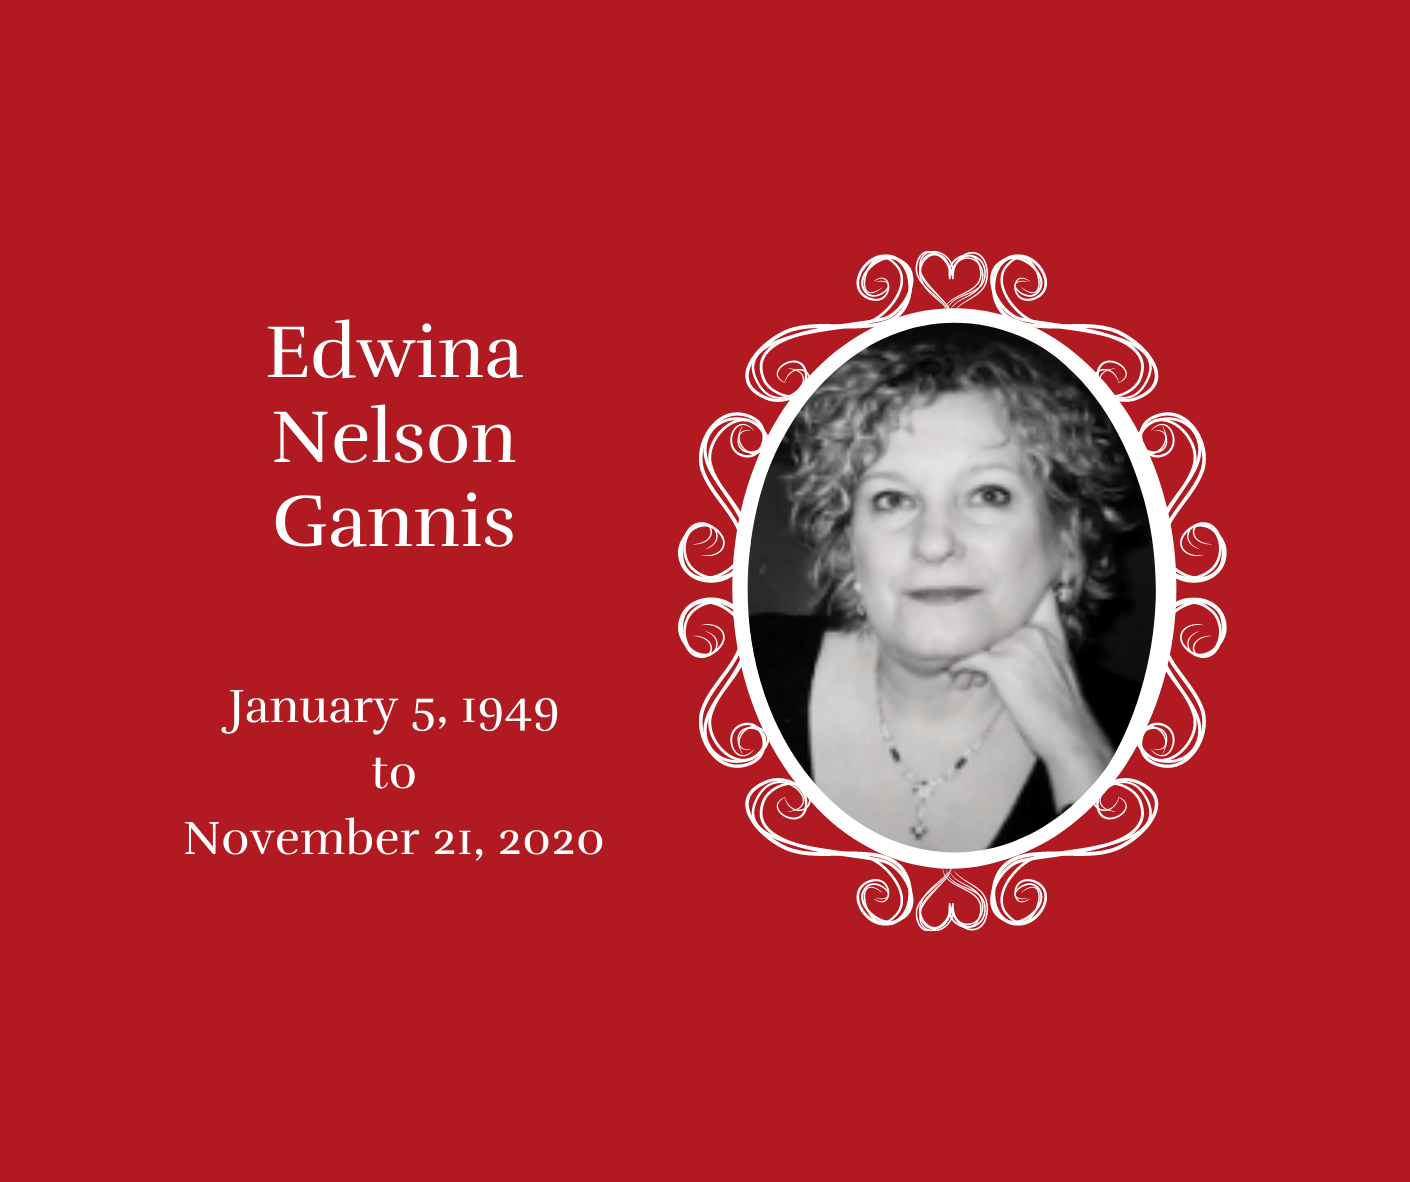 Edwina Nelson Gannis